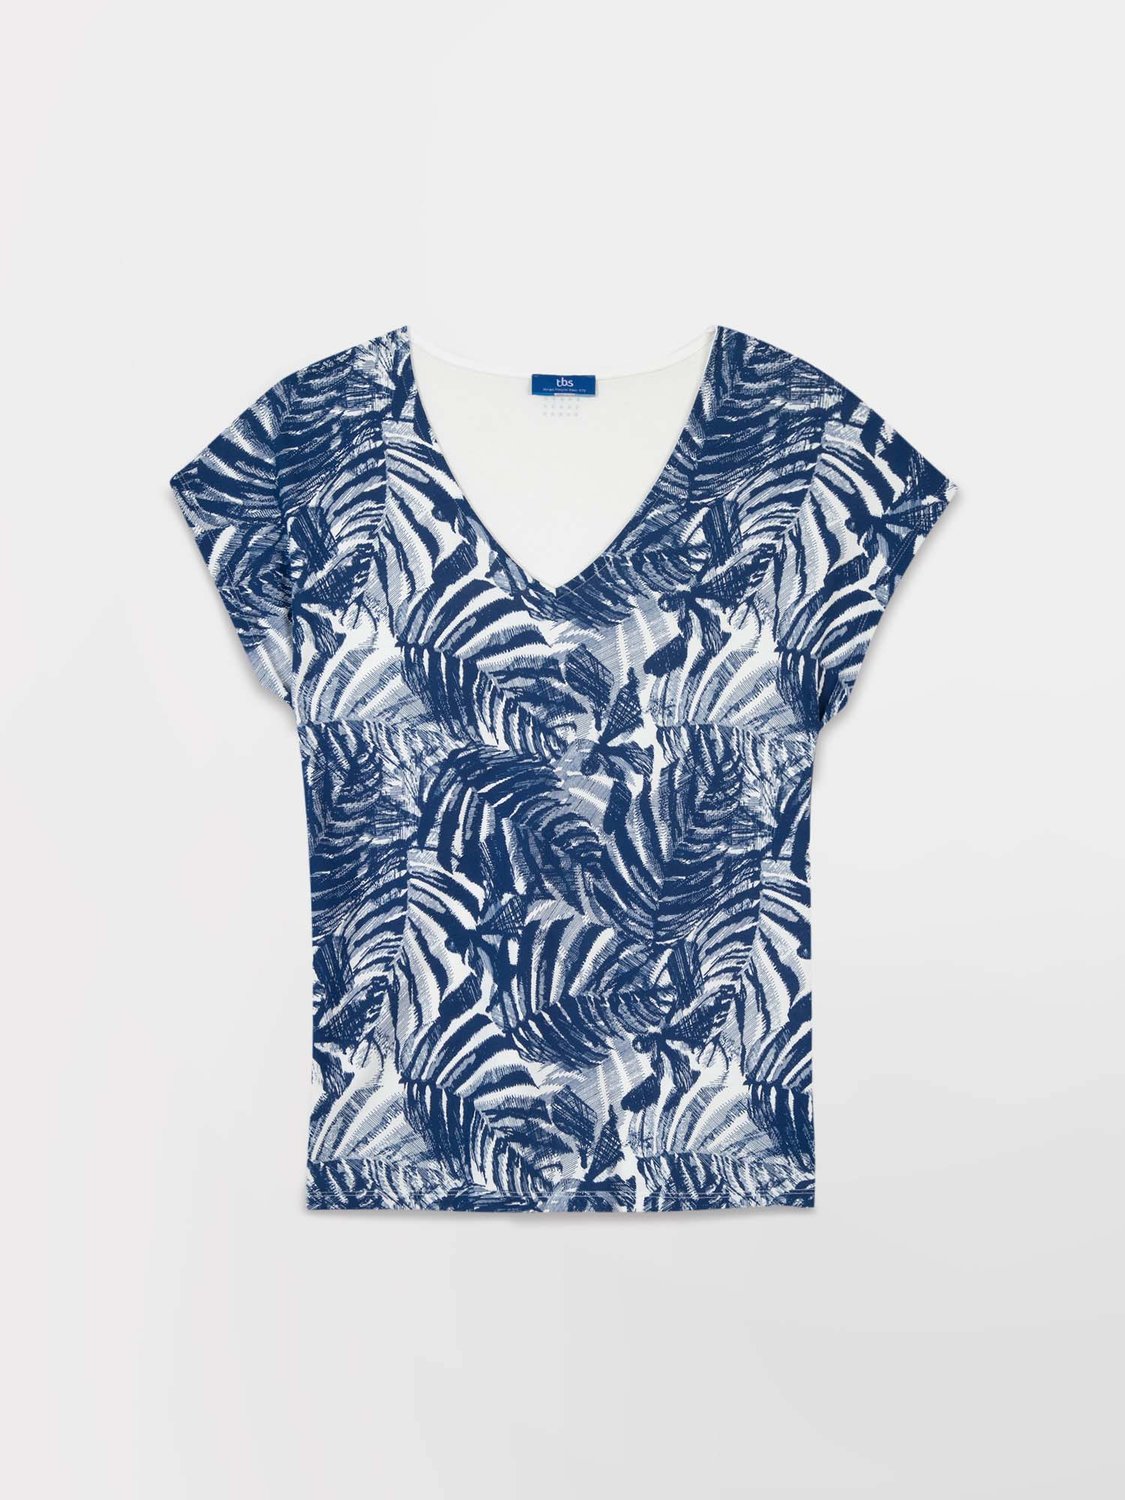 Tee Shirt Femme Coton Biologique Motif Floral Bleu